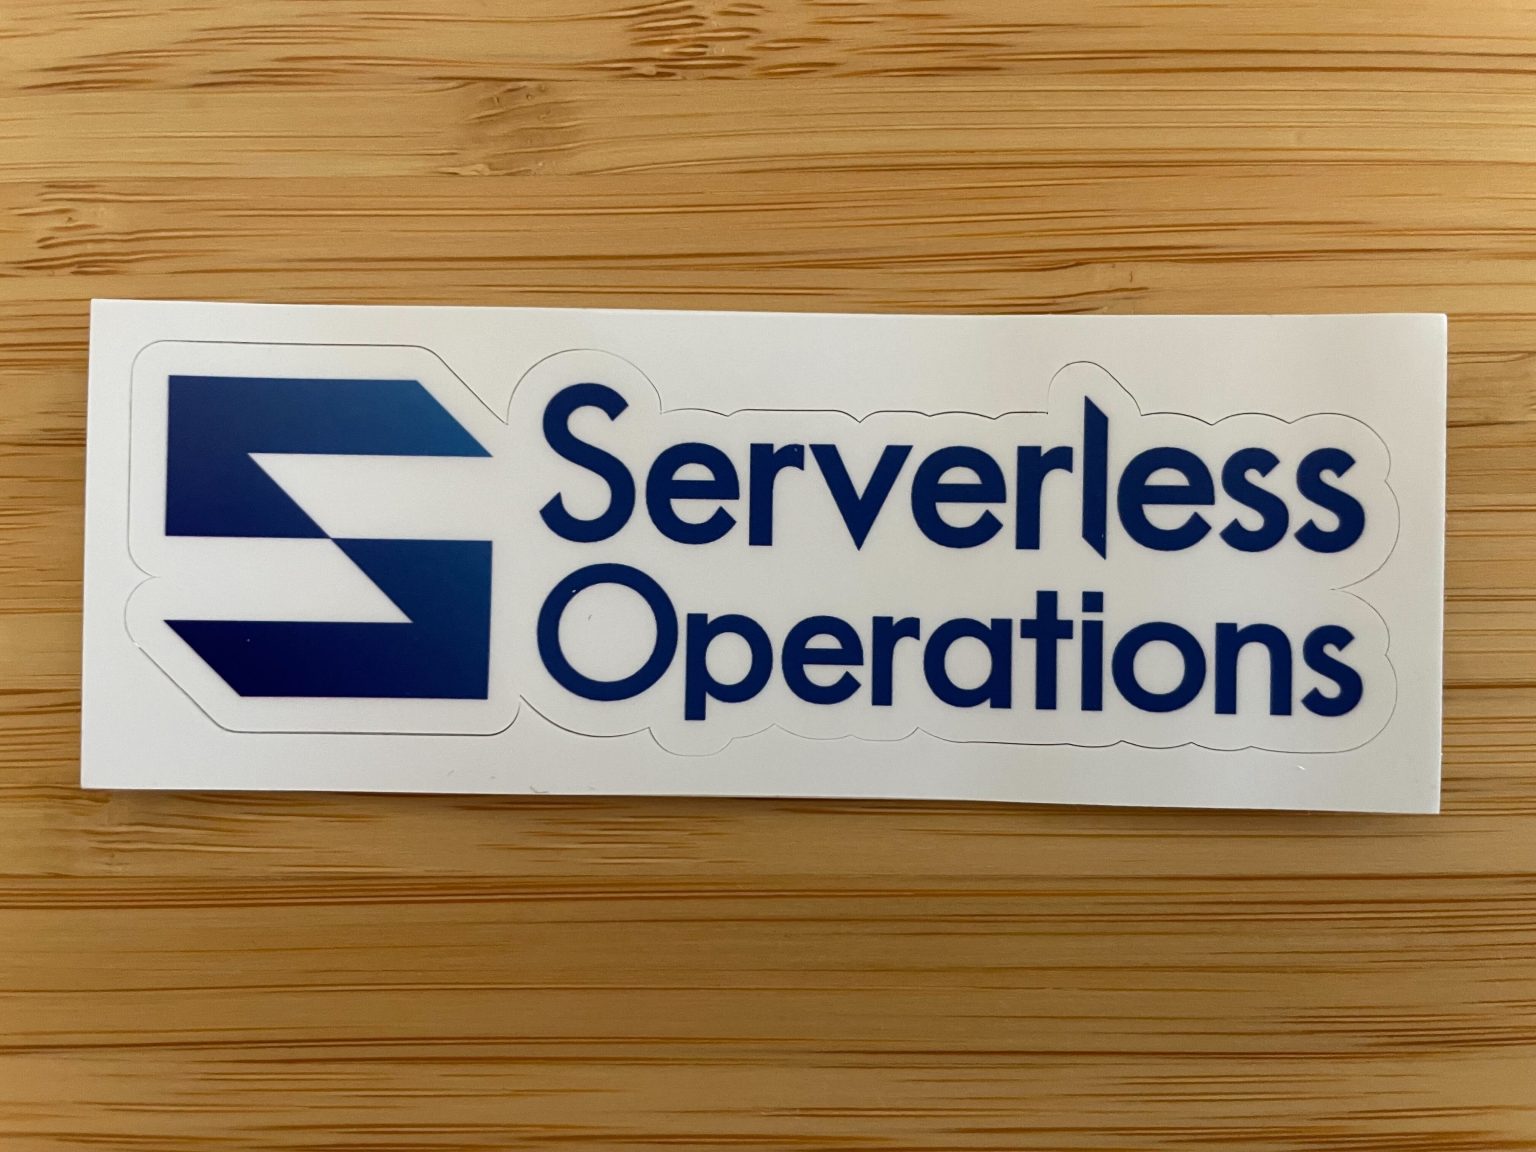 Serverless Operationsステッカー